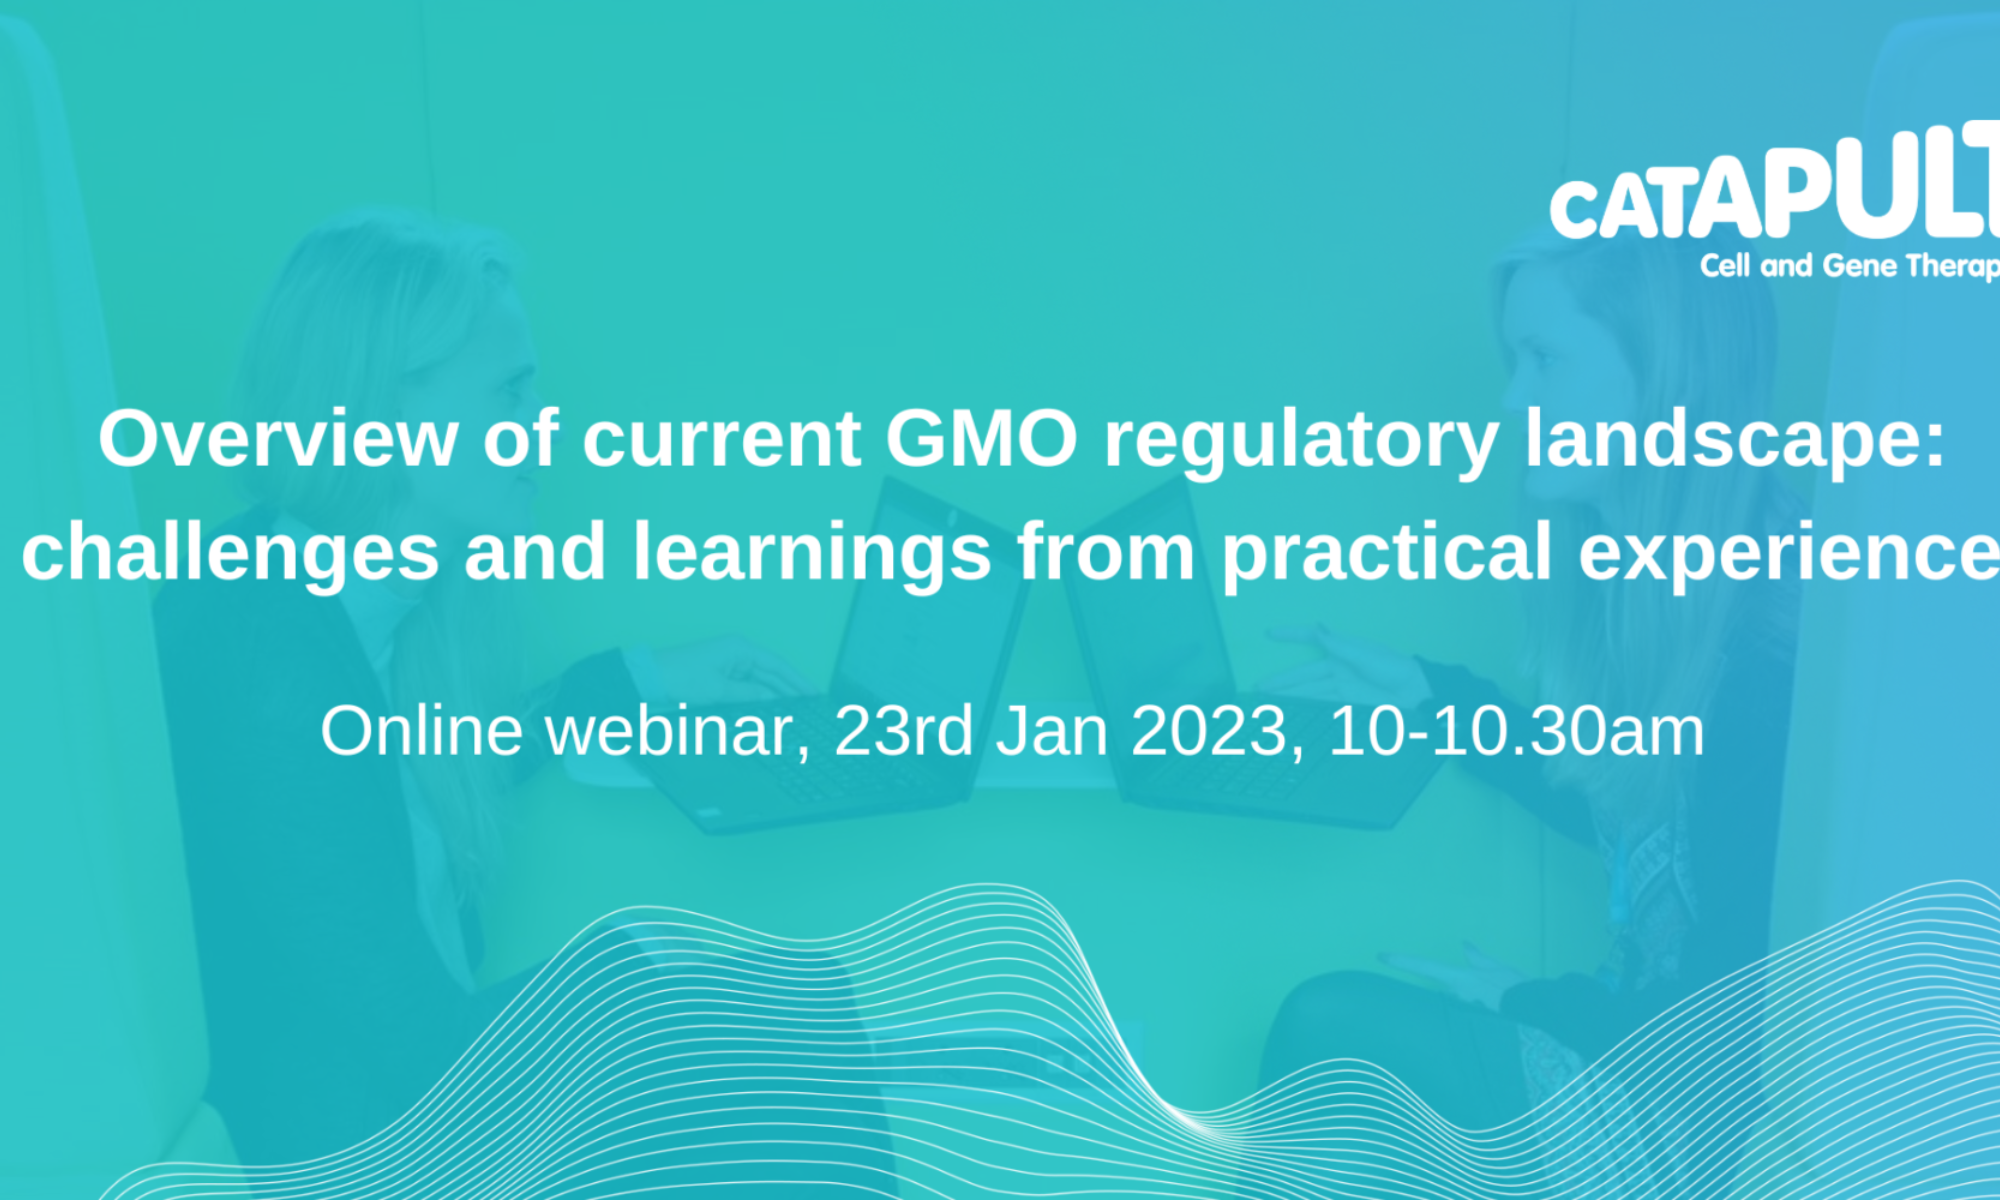 CGT Catapult webinar: Overview of current GMO regulatory landscape